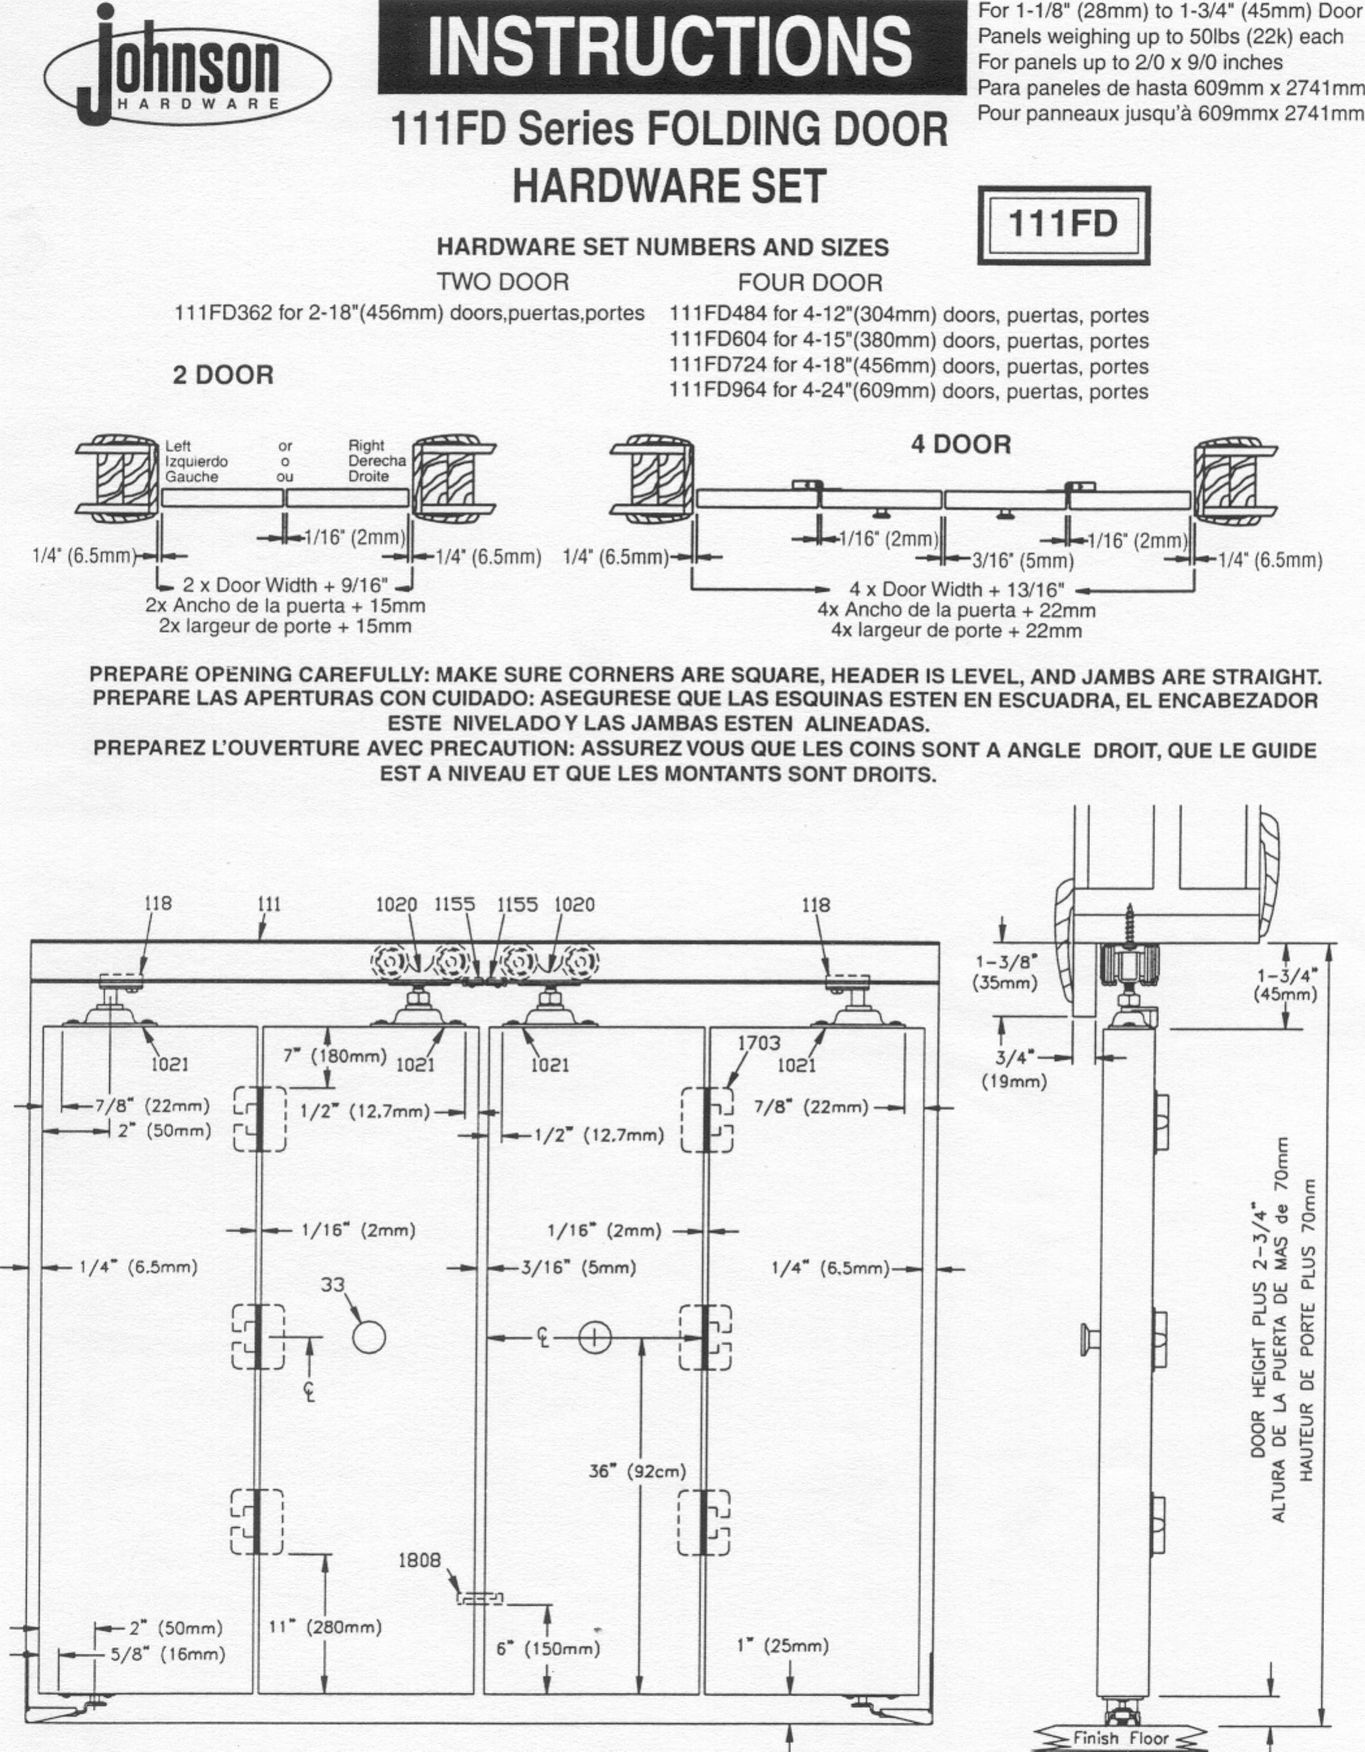 Johnson Hardware 111FD Series Door User Manual